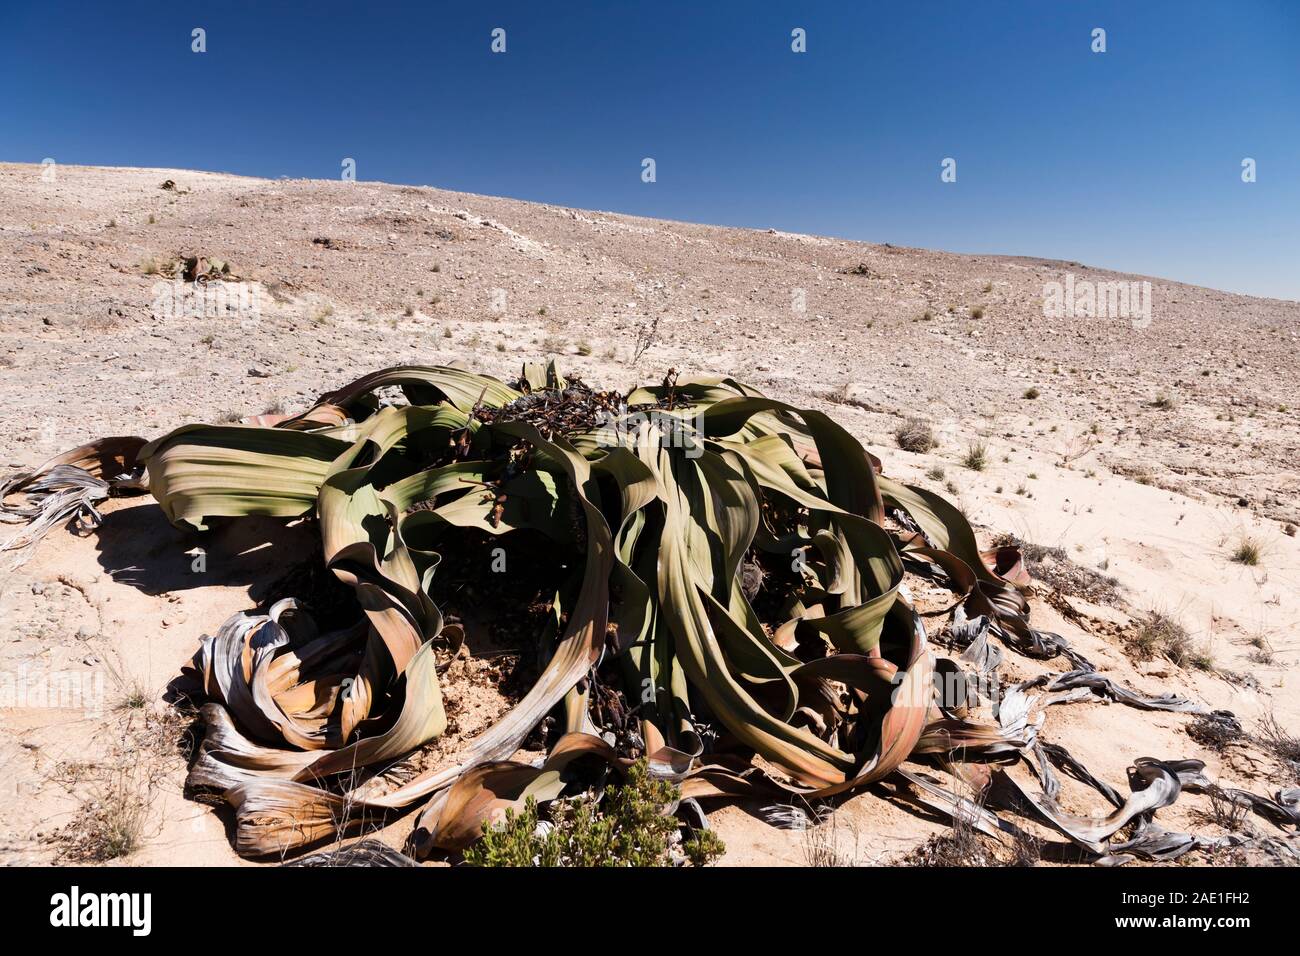 Welwitschia, planta silvestre del desierto, 'Welwitschia drive' cerca de Swakopmund, desierto de Namib, Namibia, África del Sur, África Foto de stock